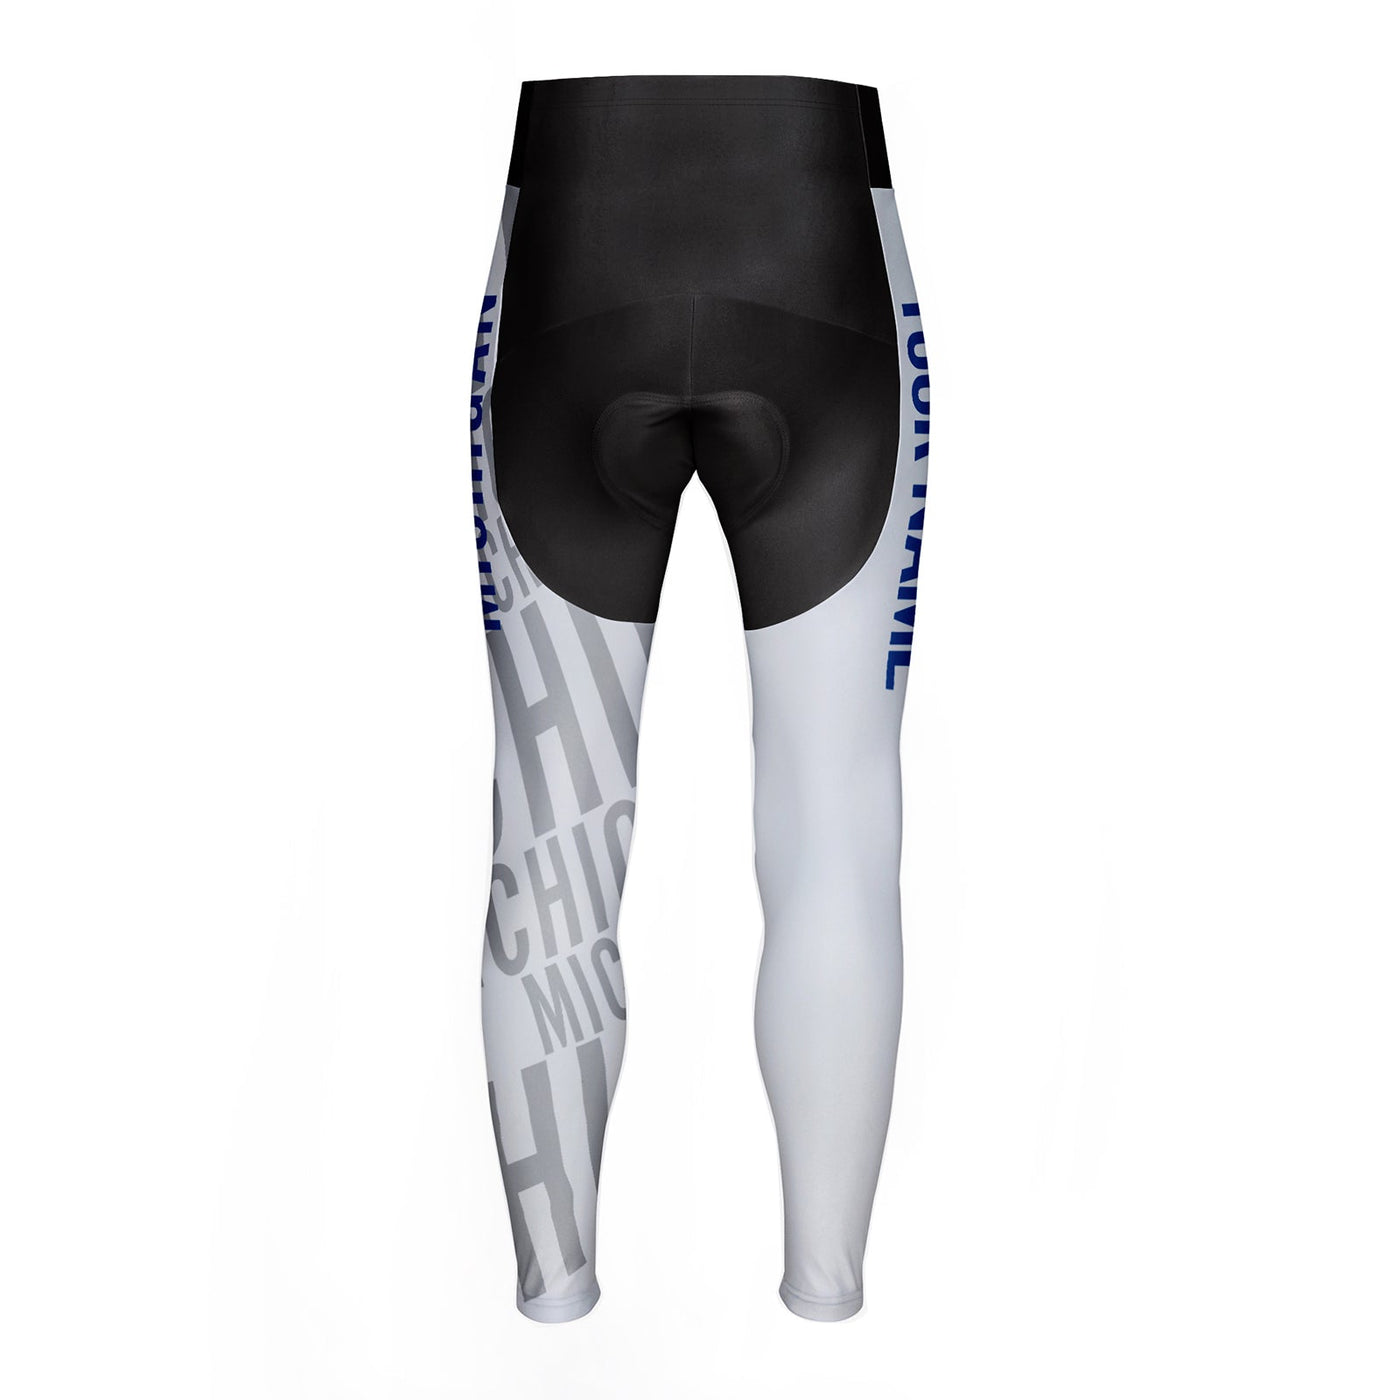 Customized Michigan Unisex Thermal Fleece Cycling Tights Long Pants